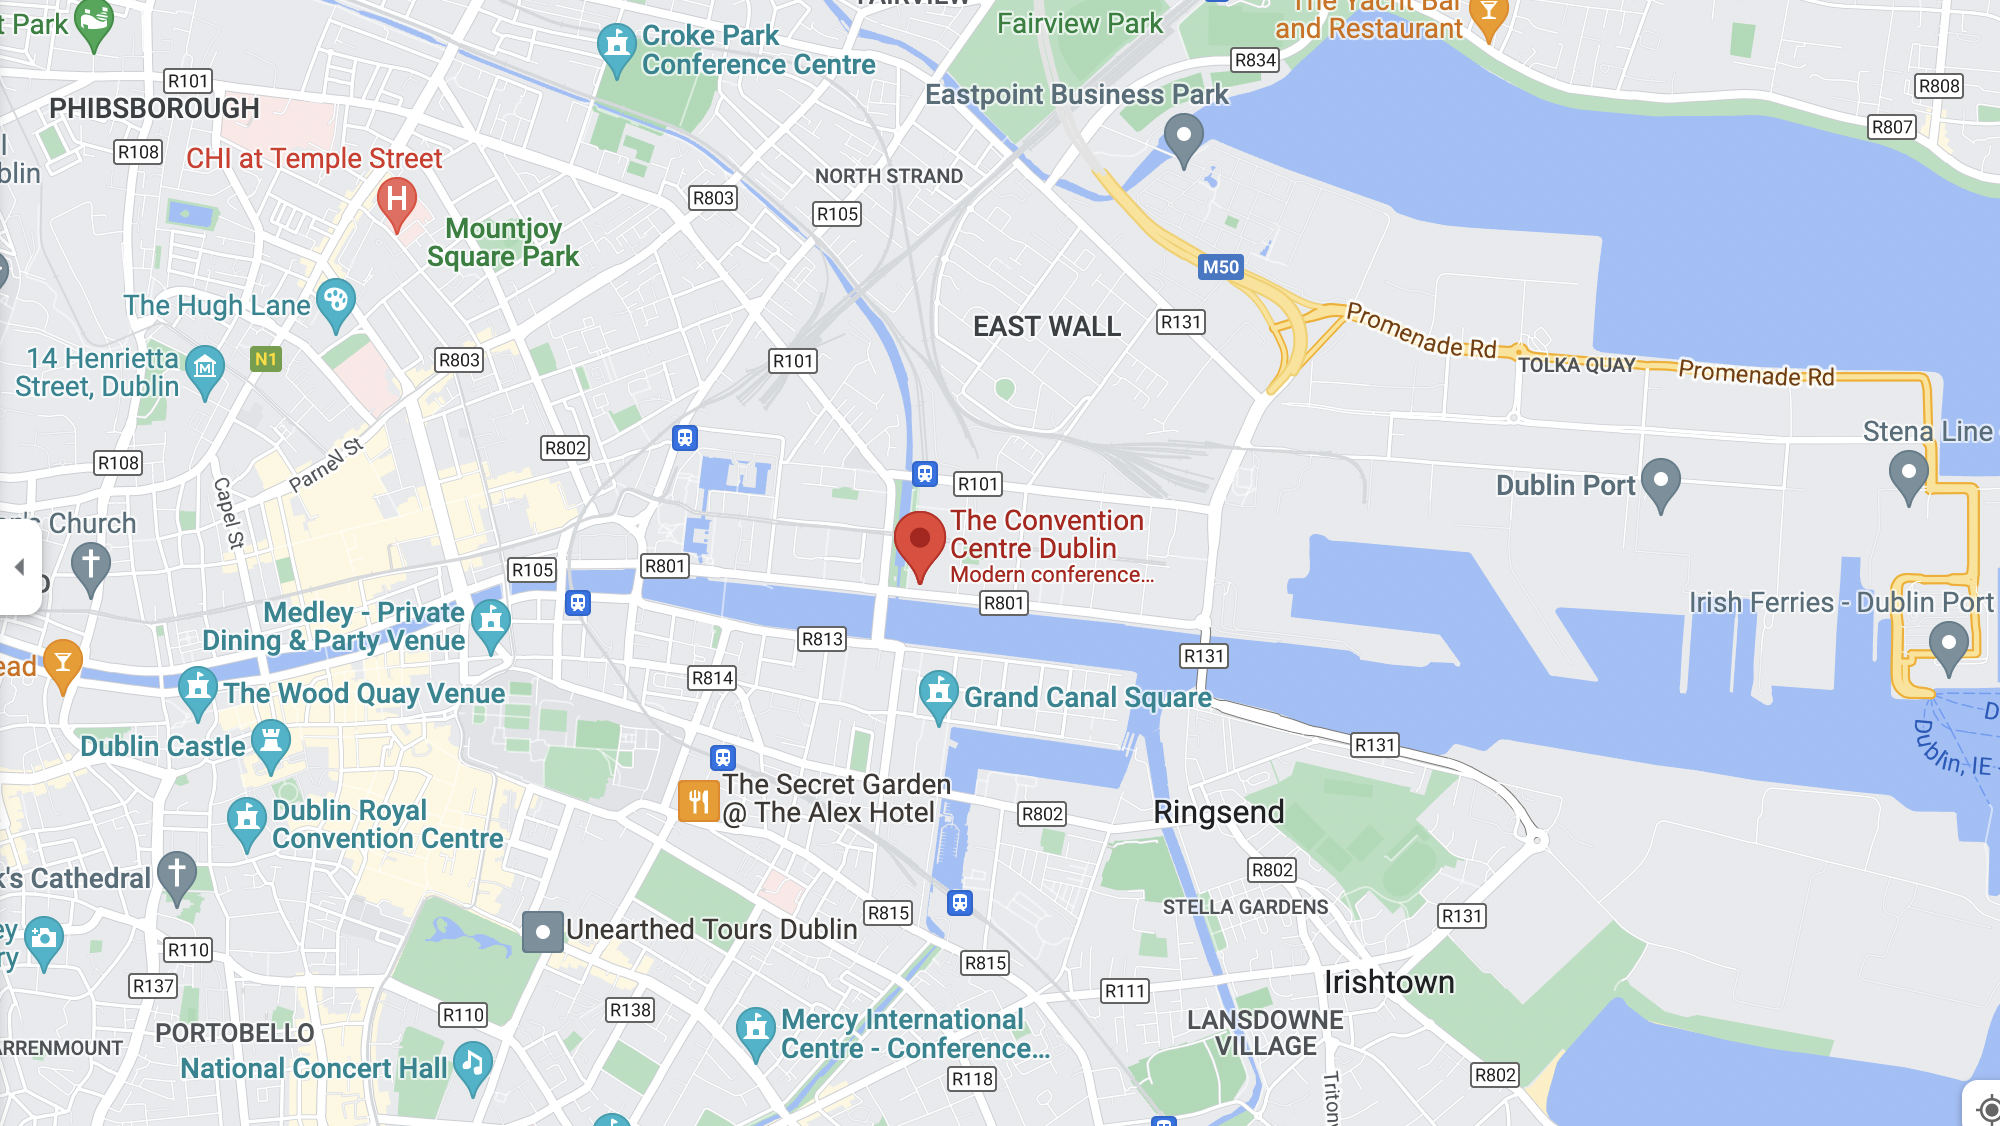 The Convention Center Dublin Google Maps Location